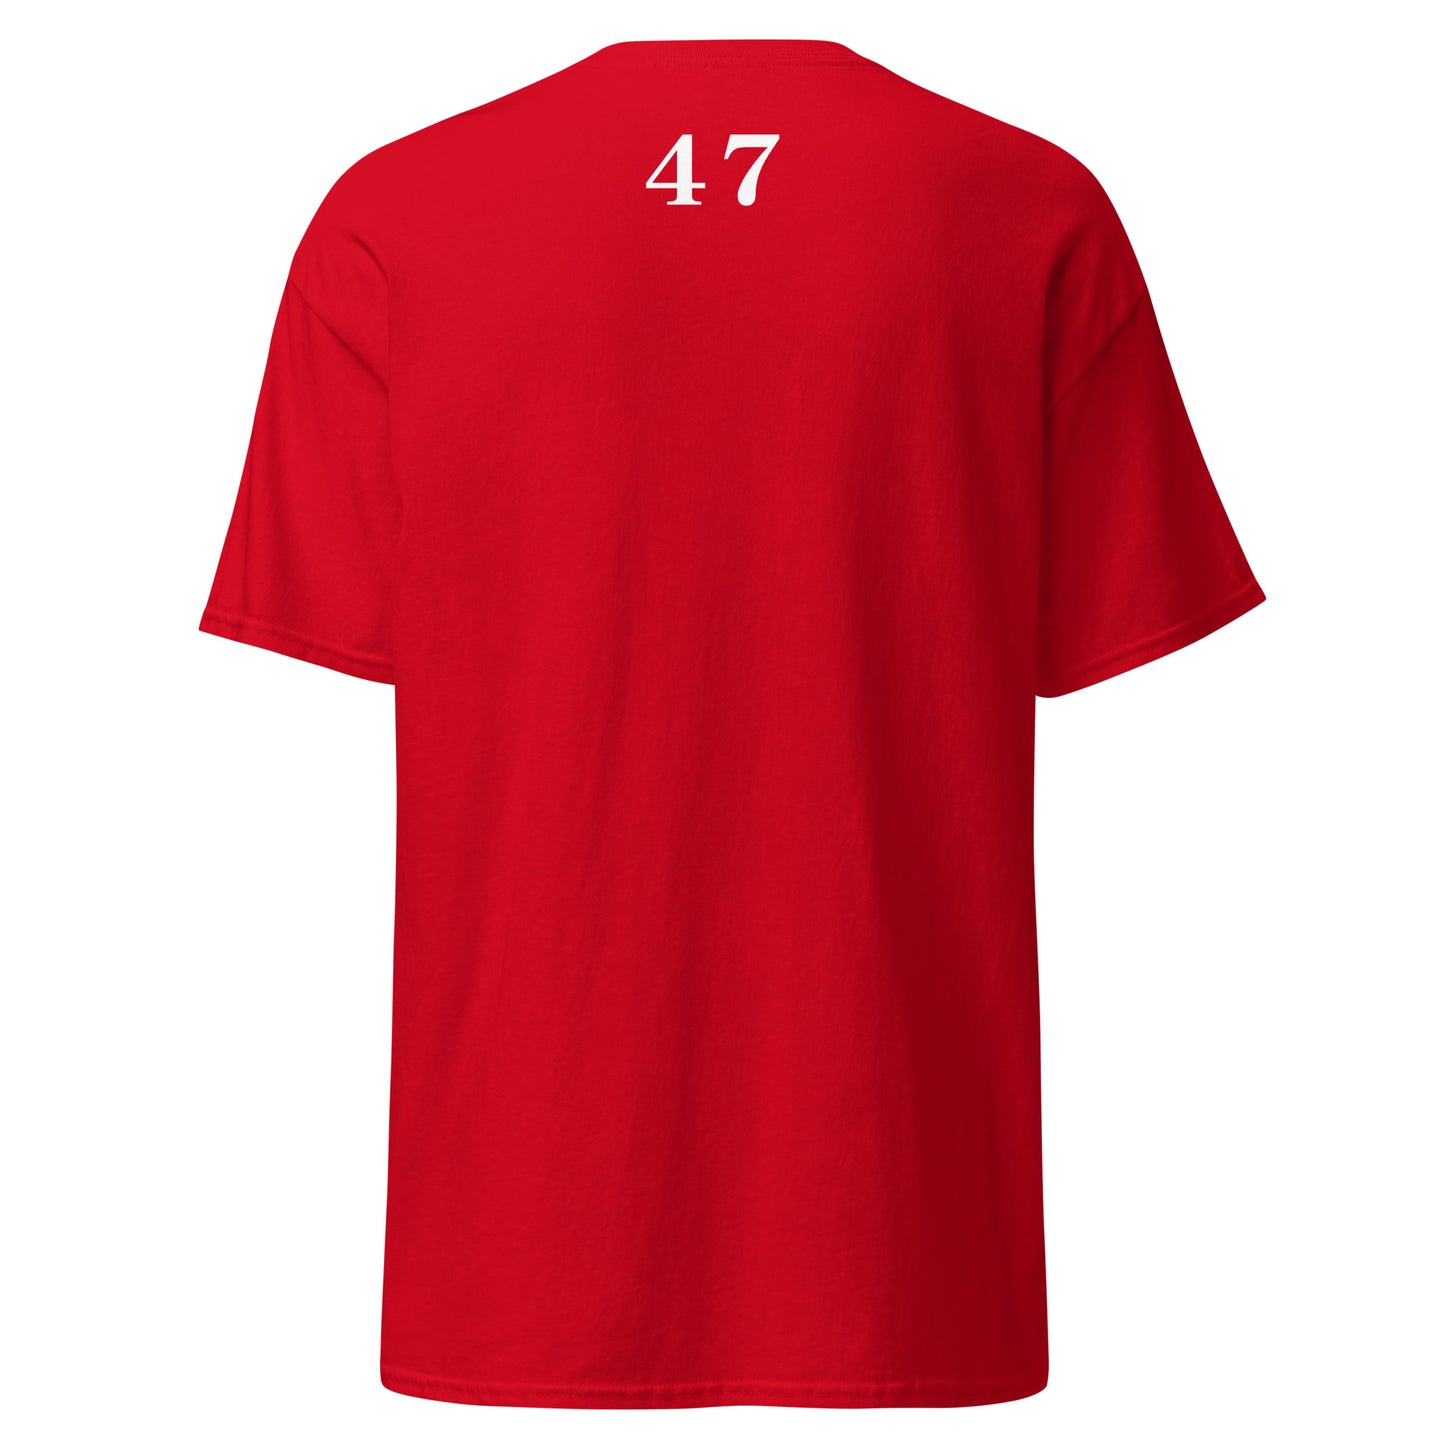 Red Men's Premium "MARTYR 47" T-shirt